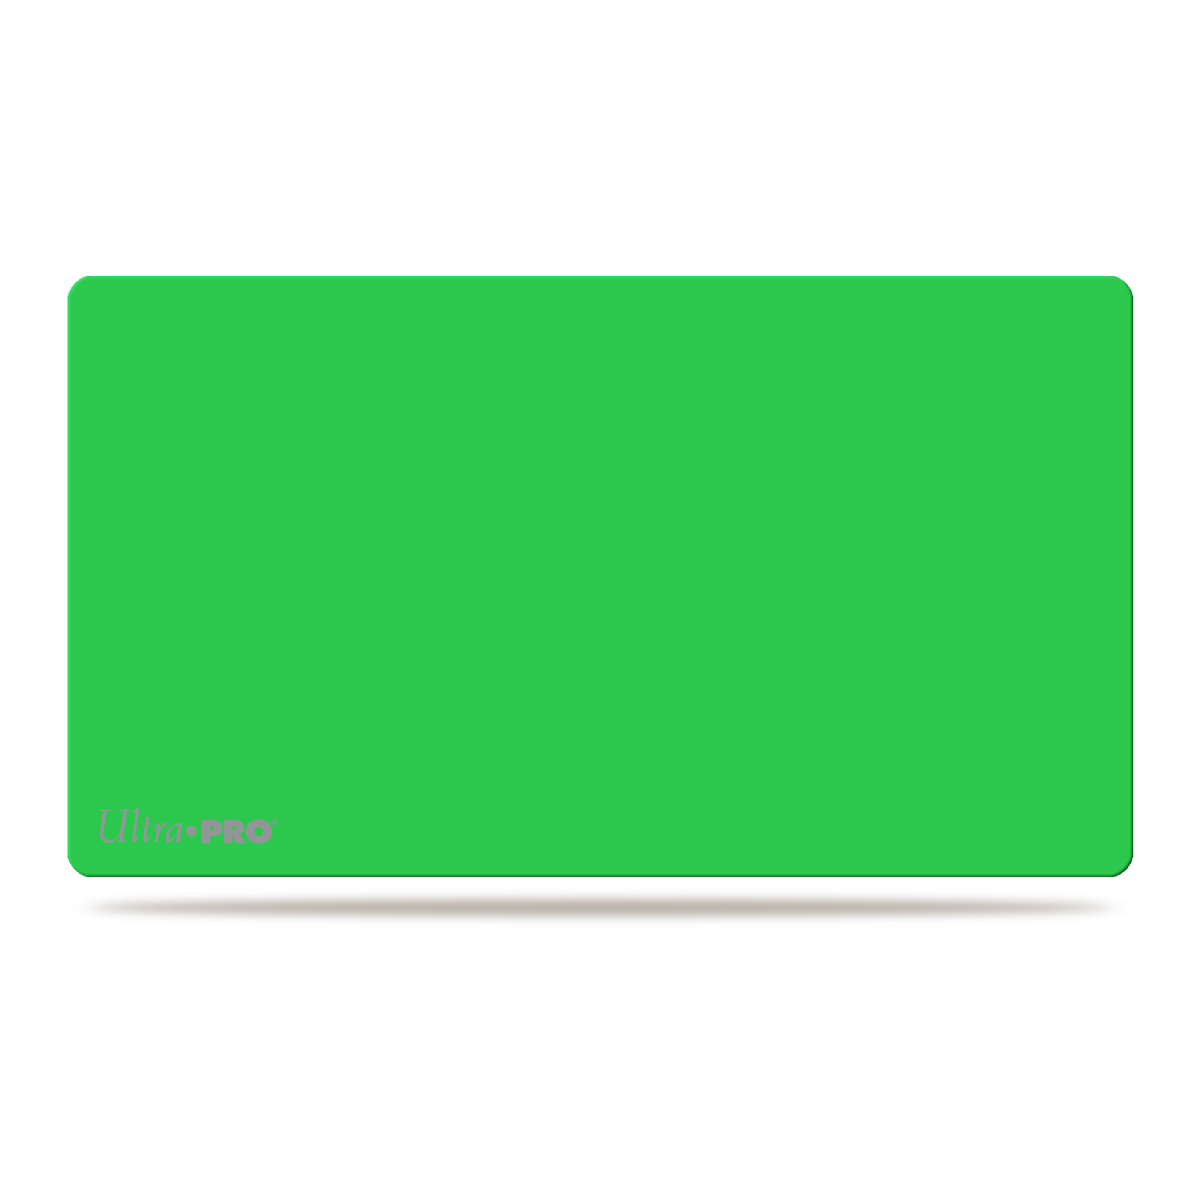 Ultra-Pro Artist Gallery Lime Green Playmat